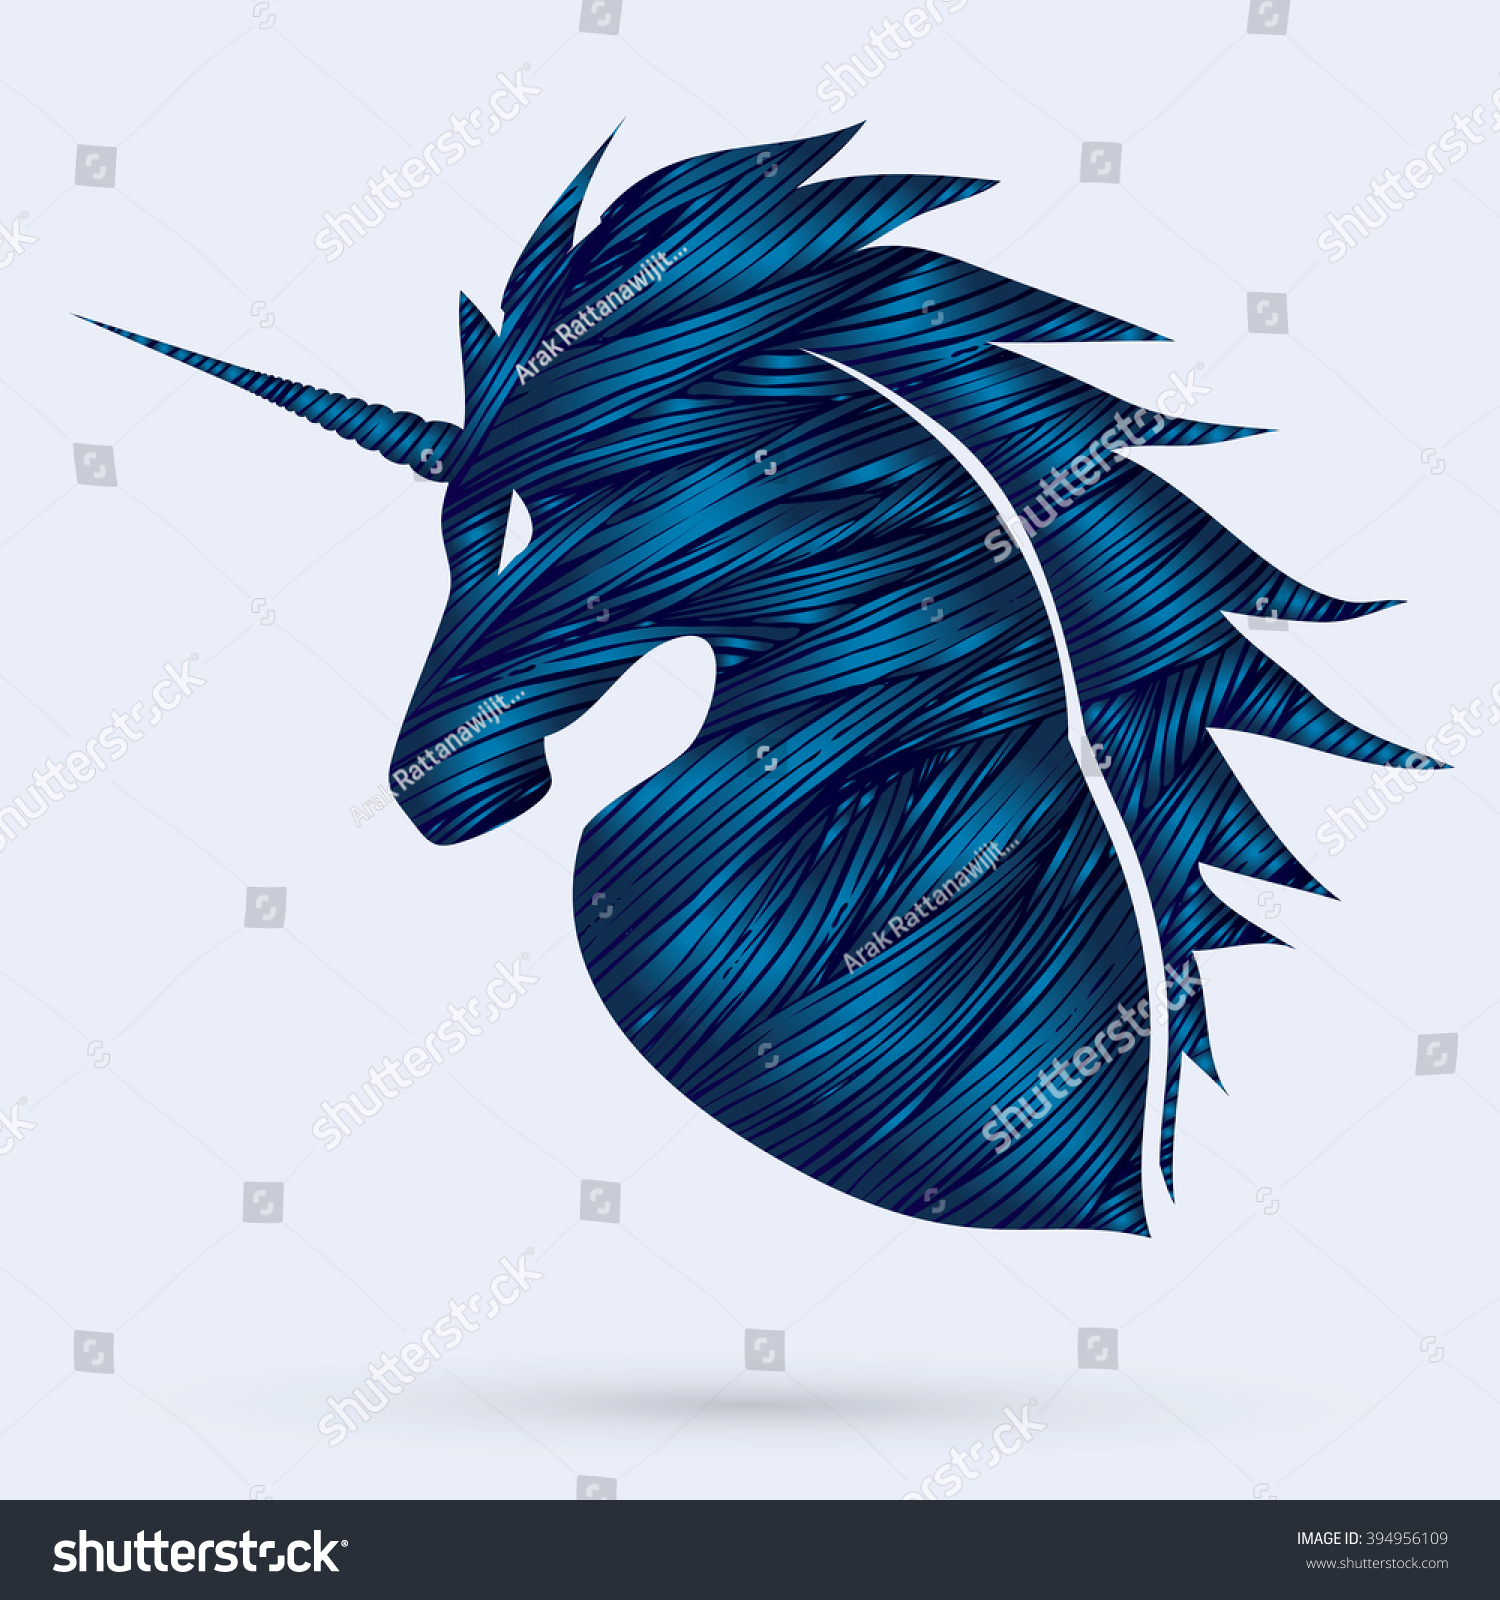 SVG of Unicorn Head designed using blue grunge brush graphic vector. svg